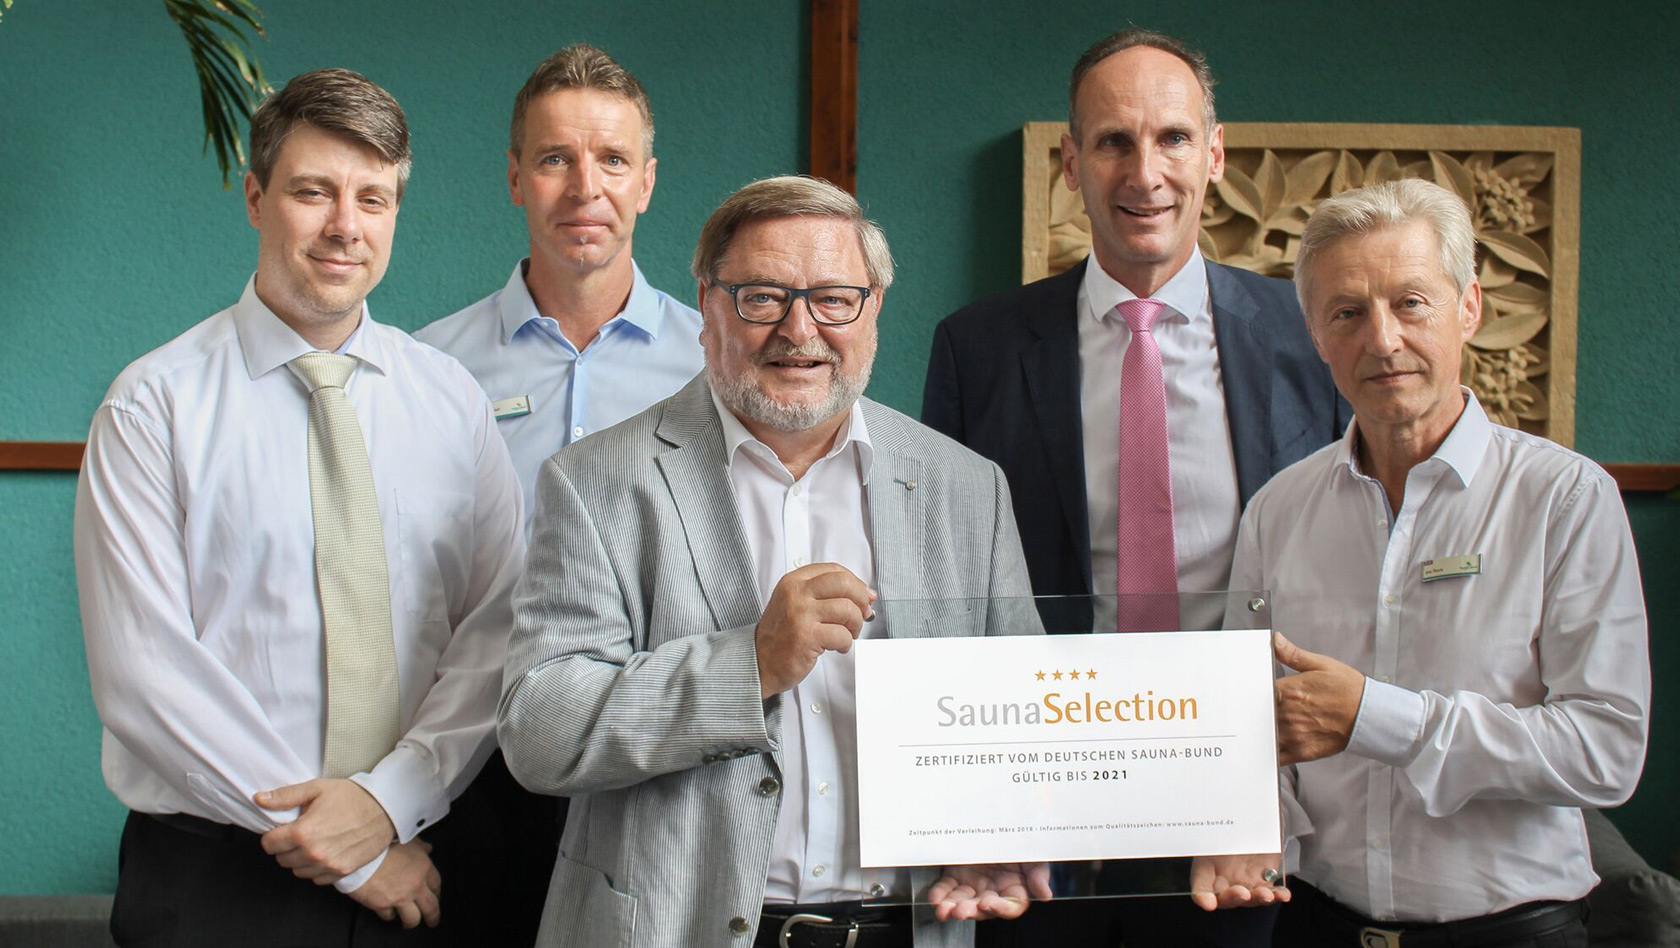 Tropical Islands Sauna Bewertung Auszeichnung SaunaSelection